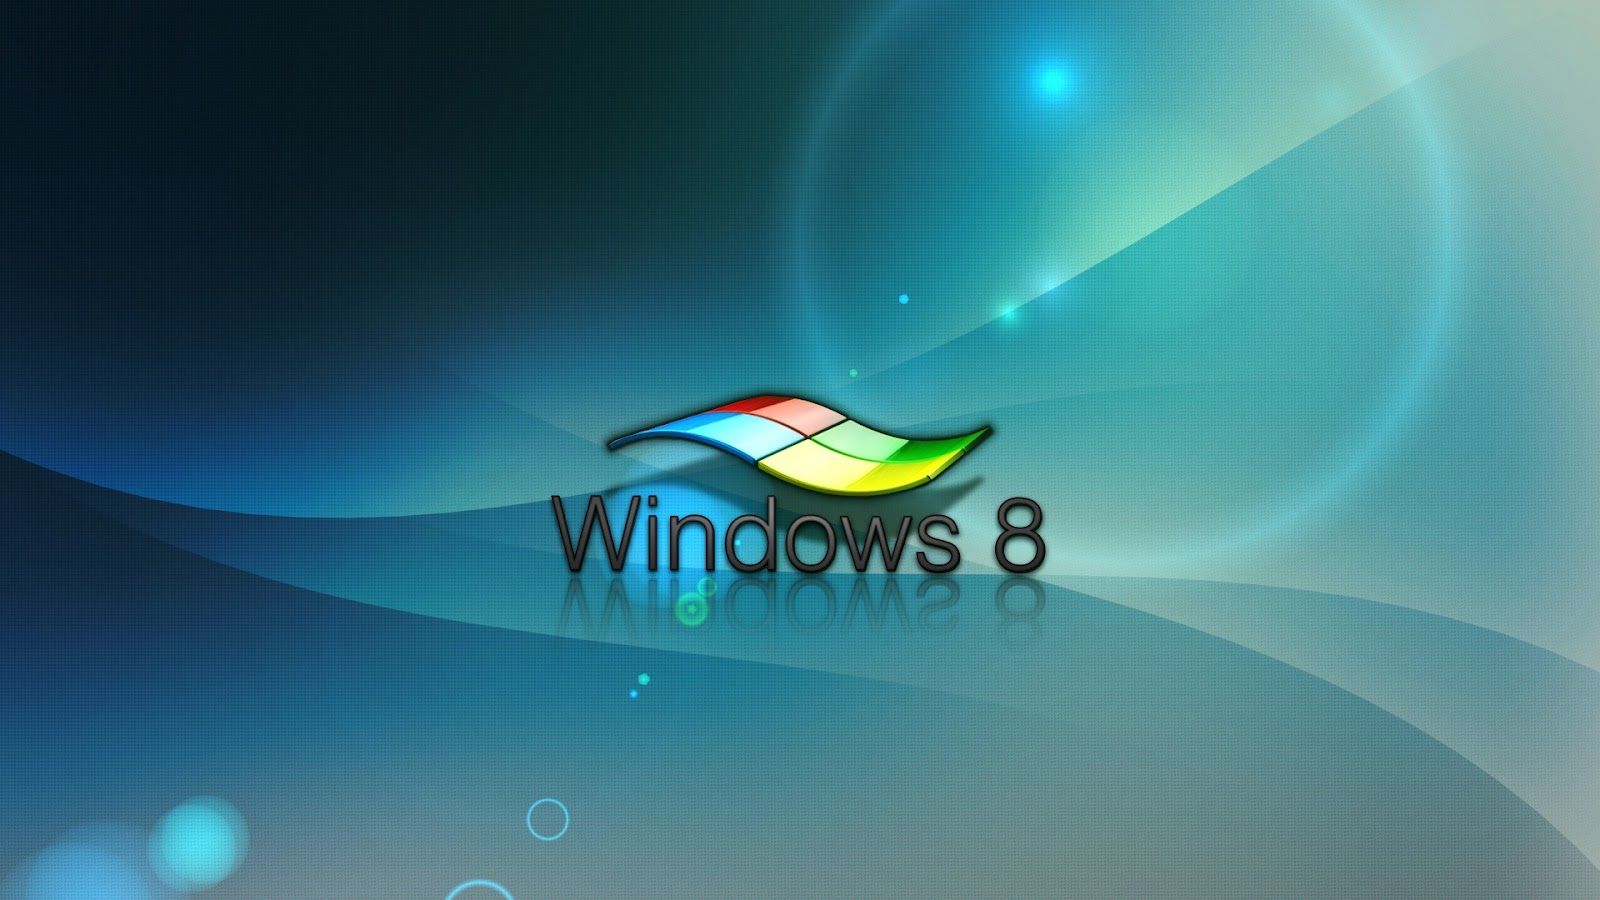 Windows 8 Wallpapers 1080p | hd wallon